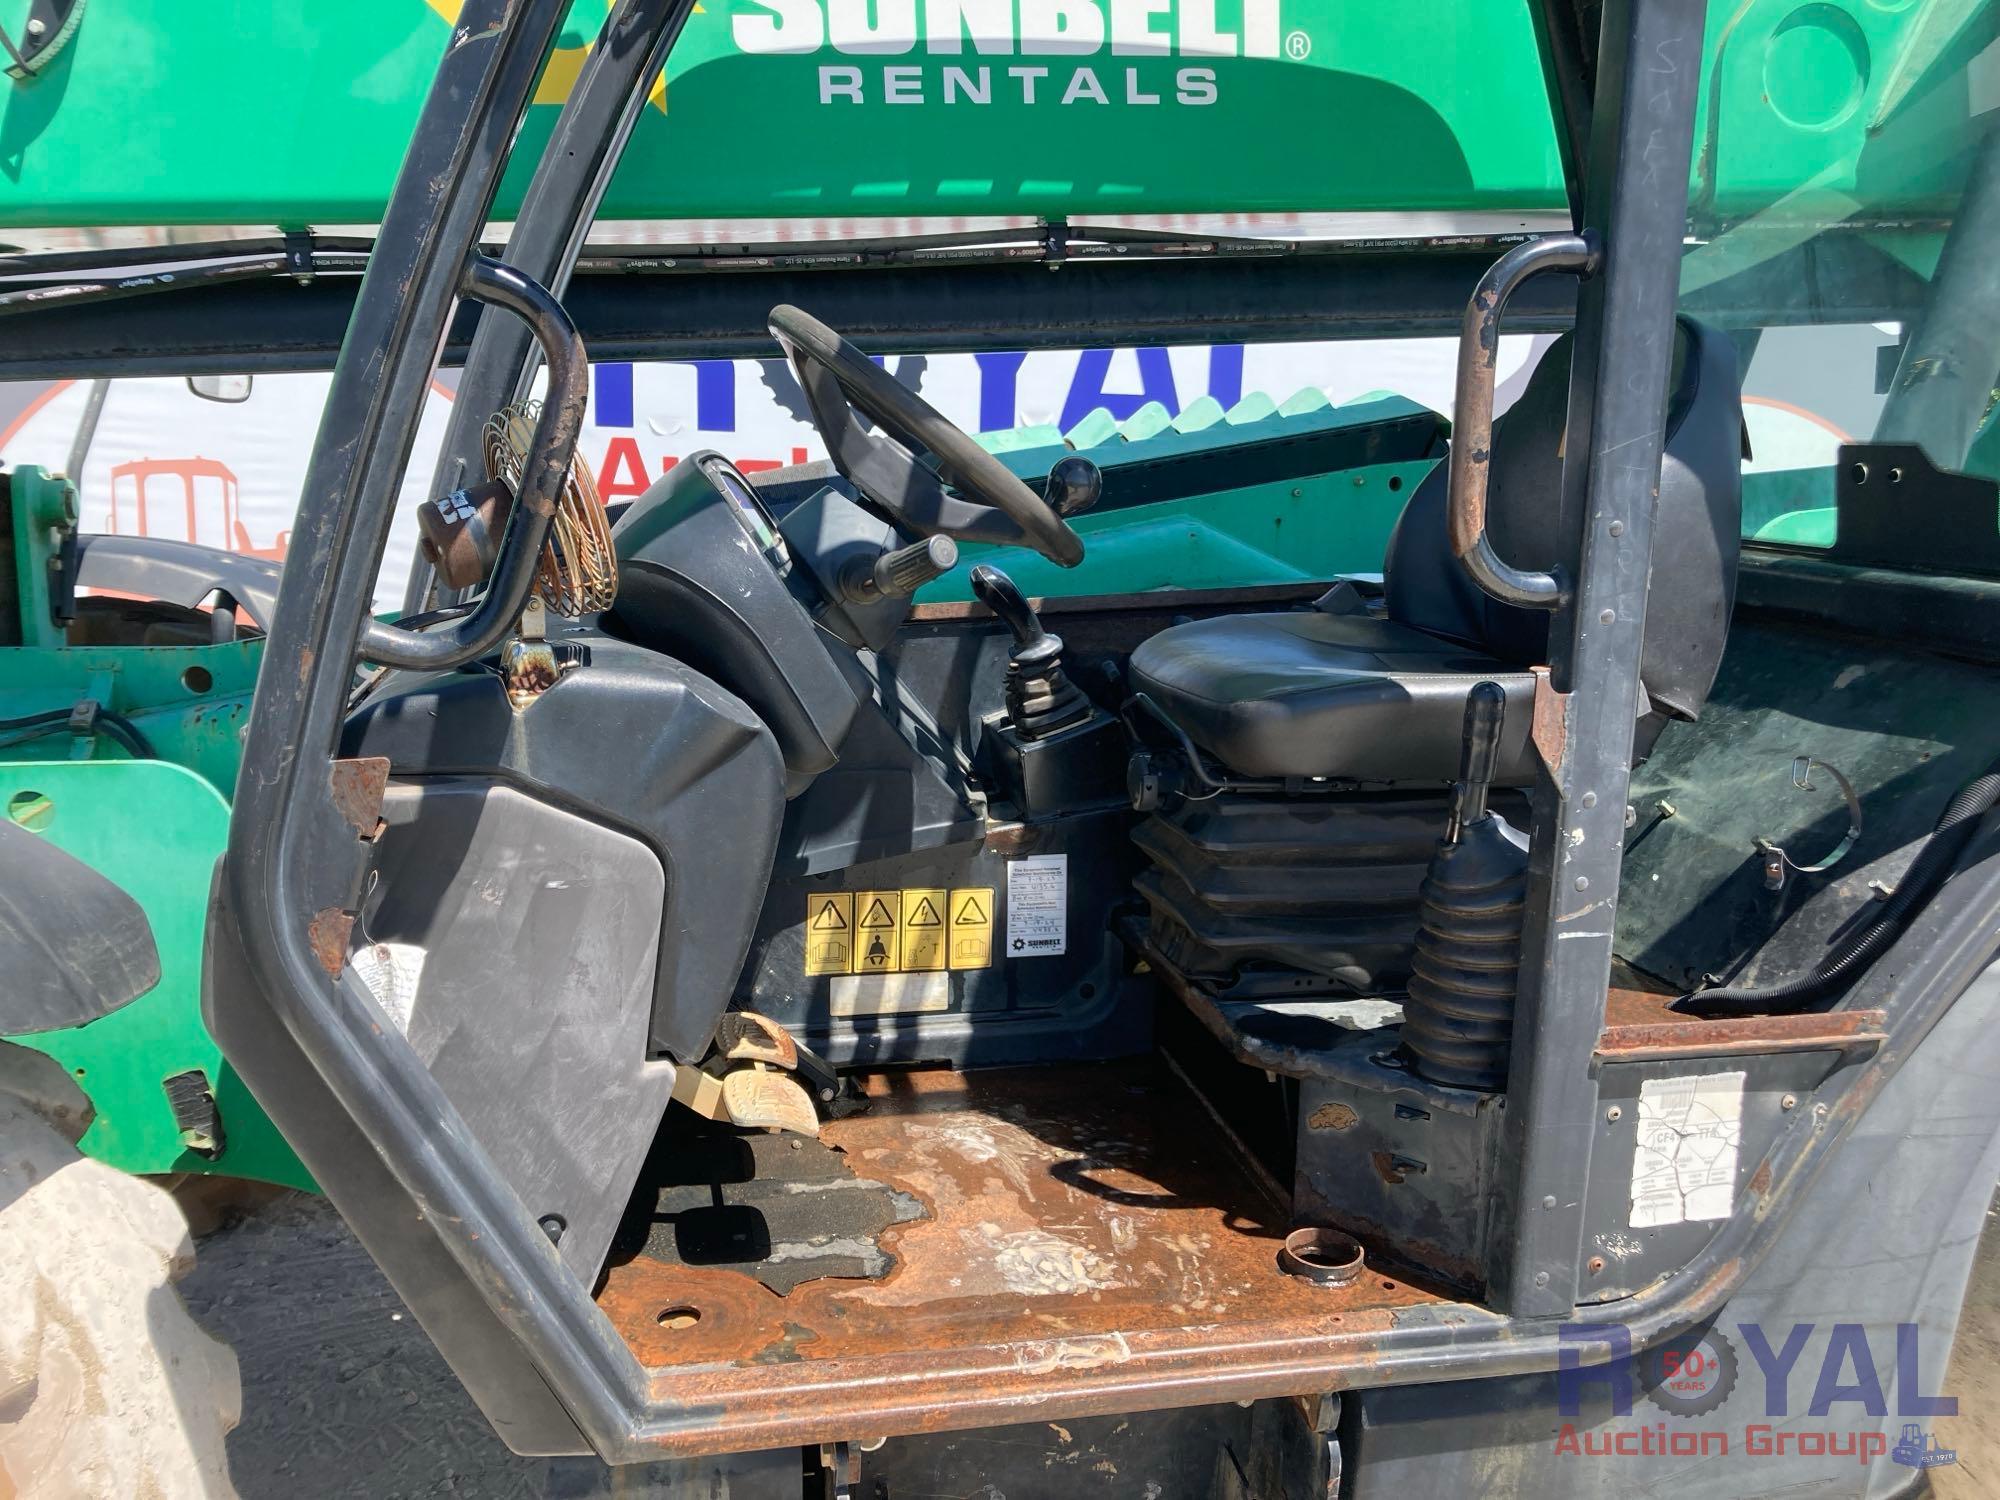 2014 JCB 507-42 4x4x4 7,000 lbs Telehandler Forklift